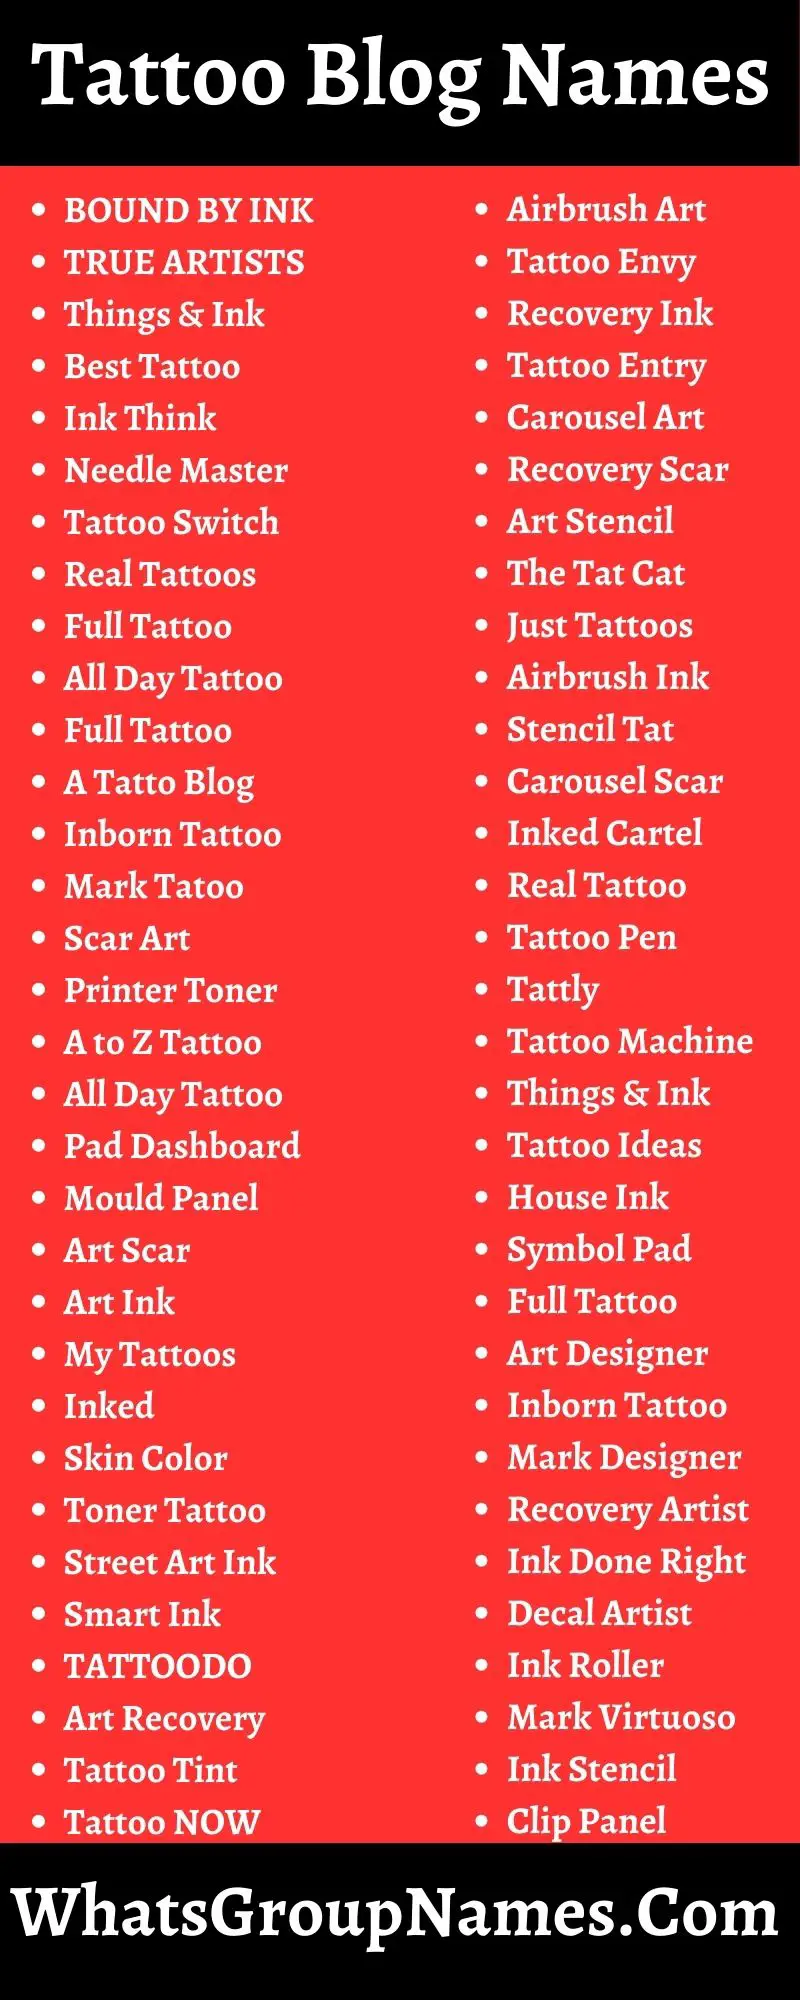 Tattoo Blog Names